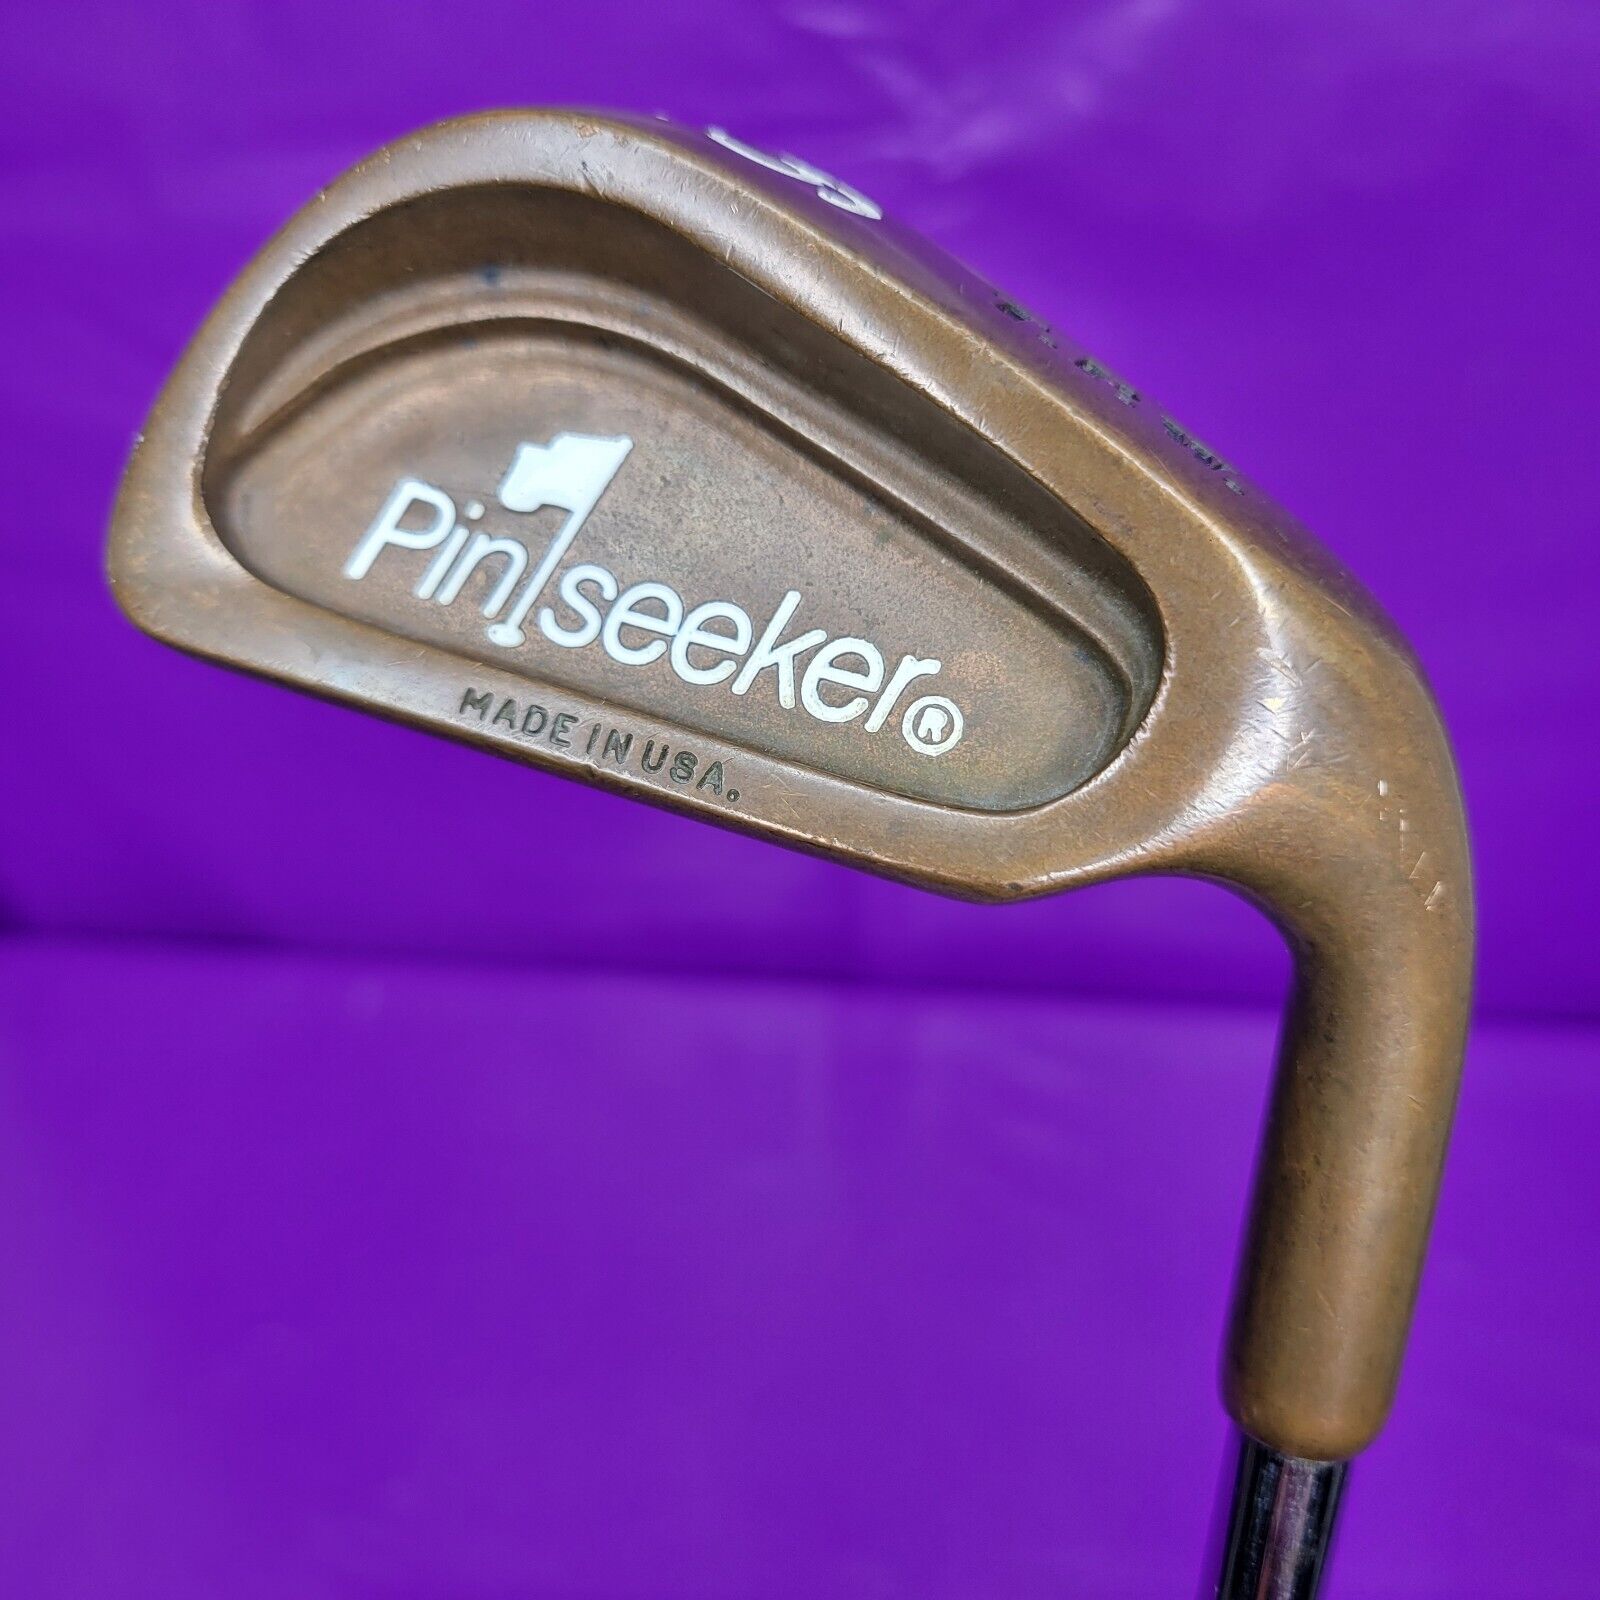 Pinseeker TPW Men's RH Copper golf club 6 iron made in USA Pin Seeker  | eBay